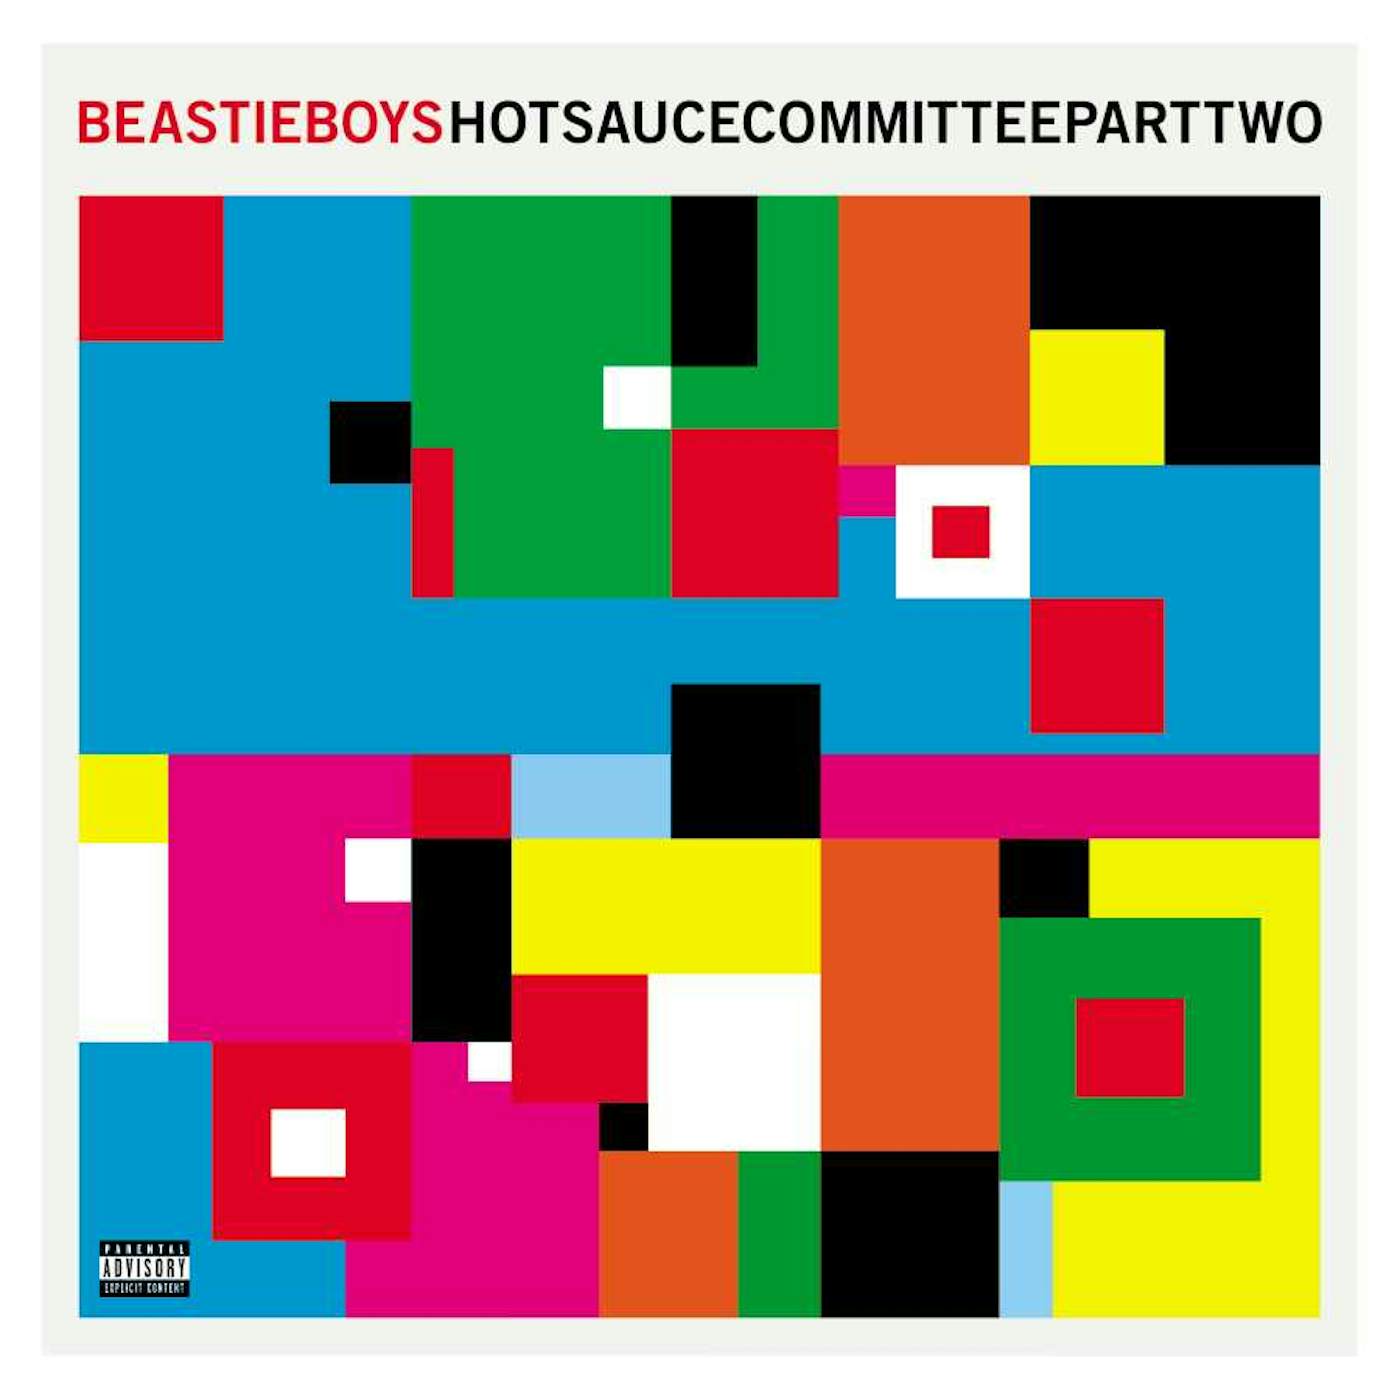 Beastie Boys HOT SAUCE COMMITTEE PART TWO (180G/2LP) Vinyl Record